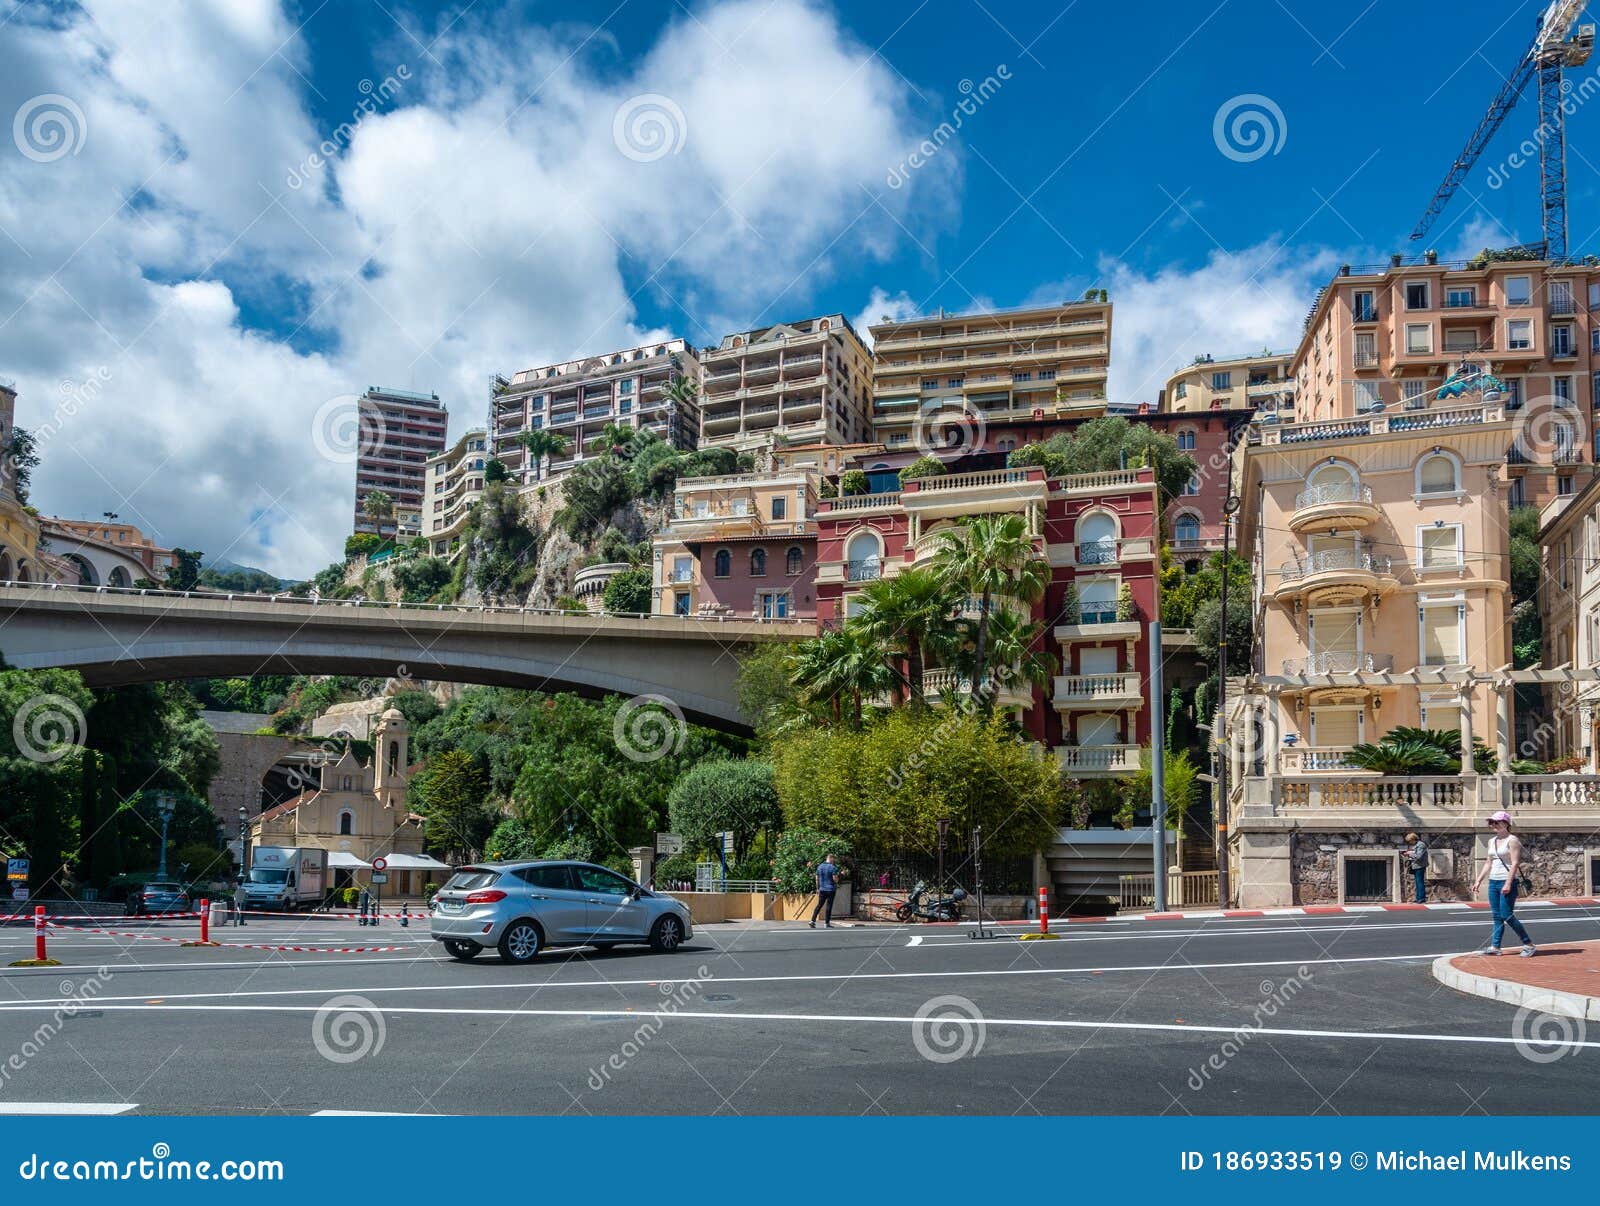 Streets Of Monaco Editorial Stock Image Image Of Asphalt